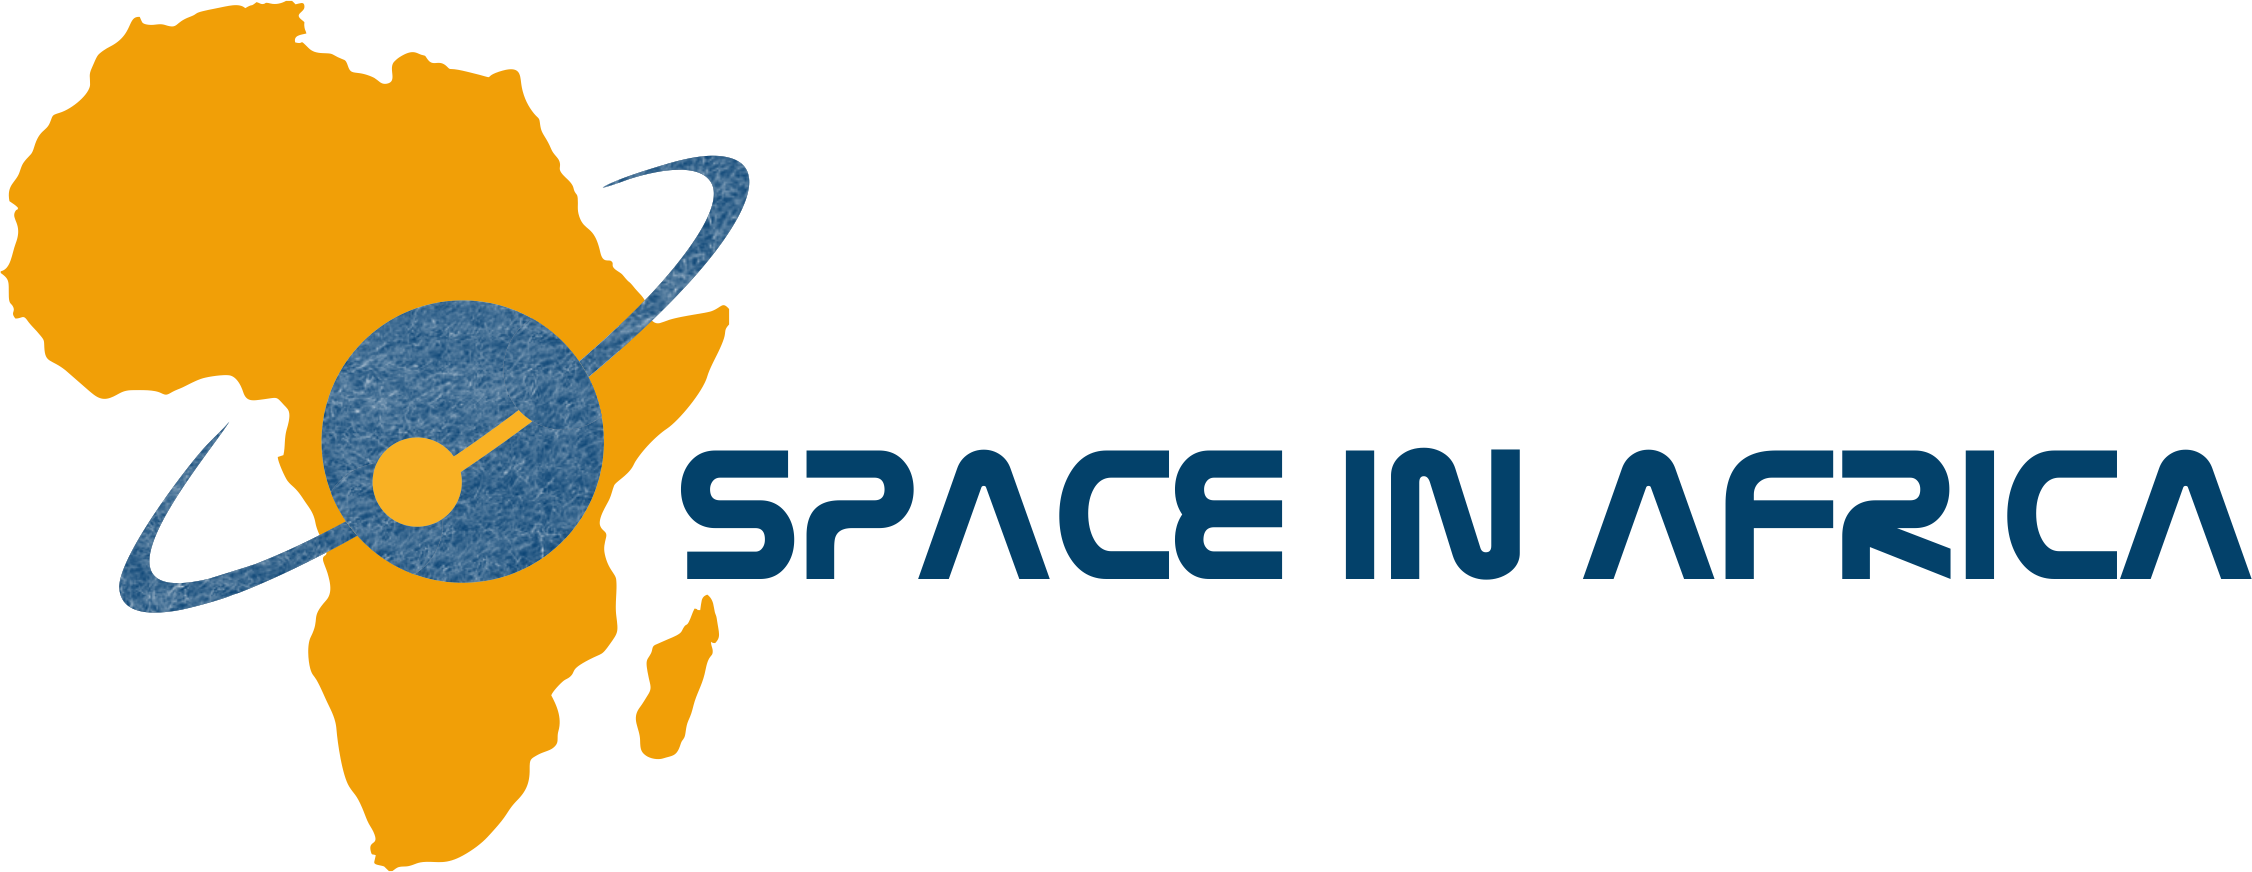 Space-in-Africa-Full-logojj.png